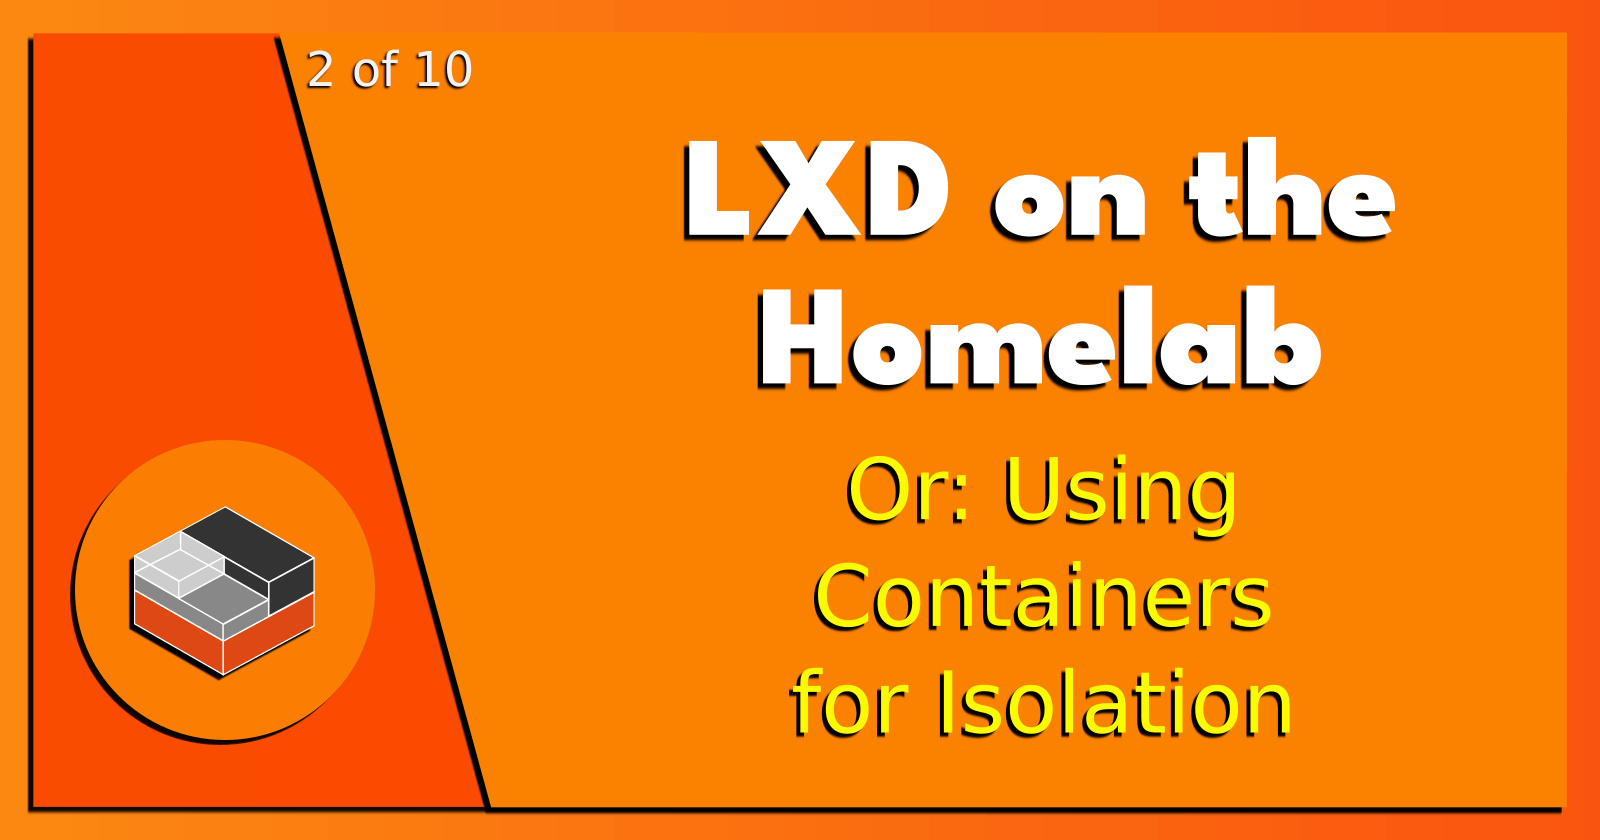 2 of 10: LXD on the Homelab.